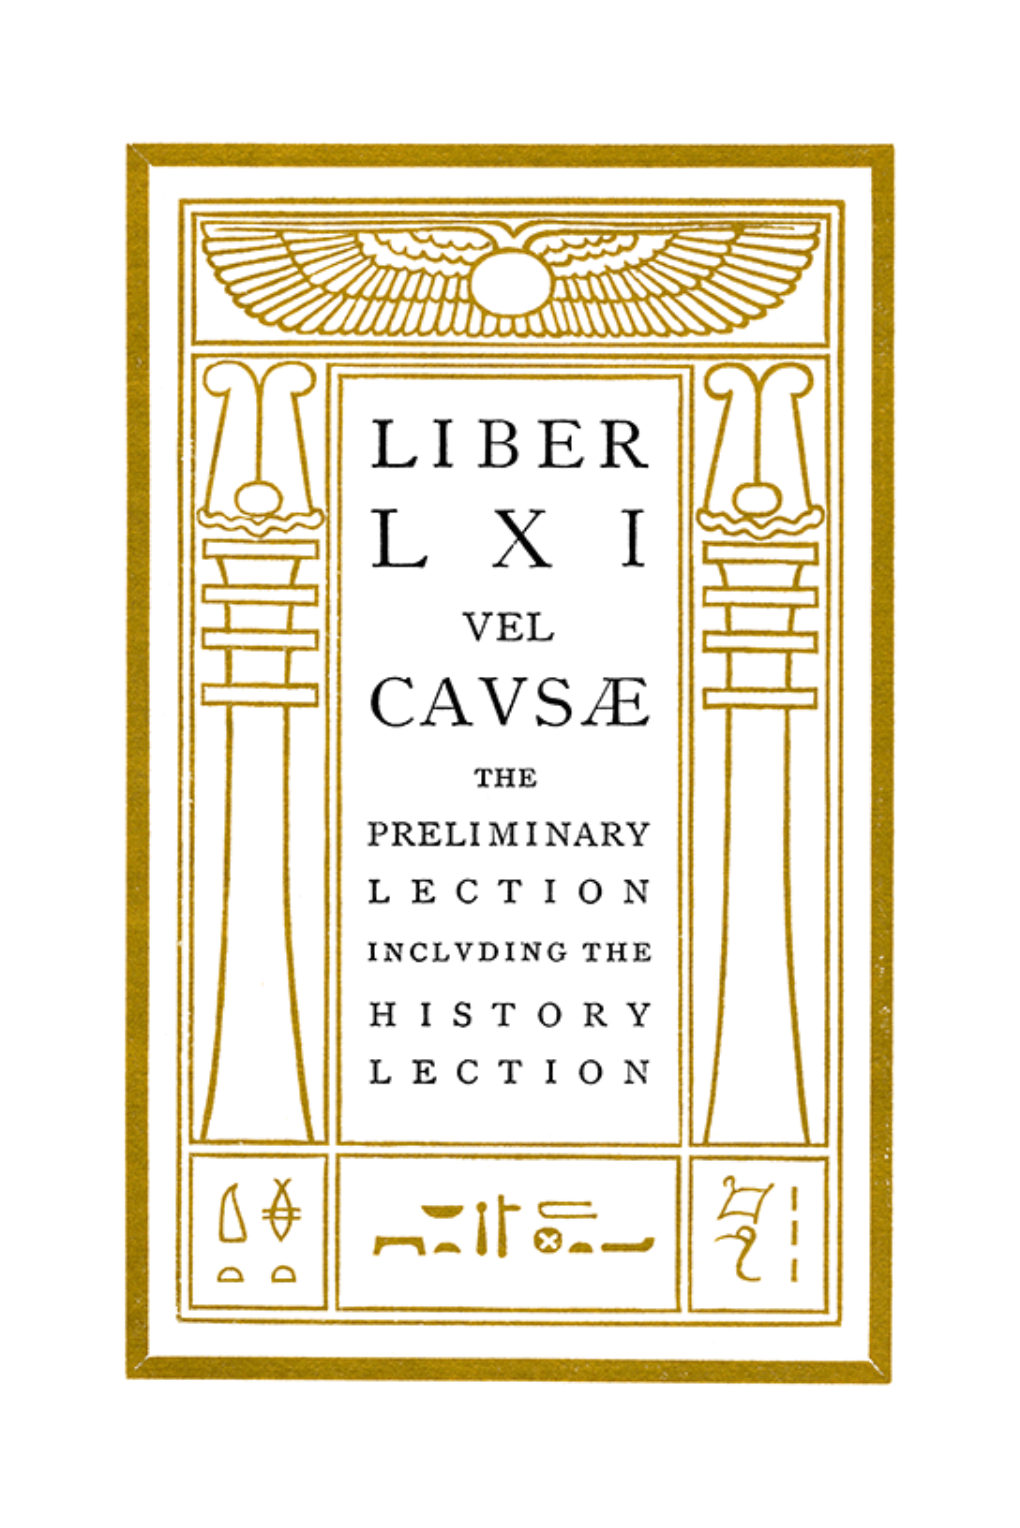 "LIBER LXI." Thelema (1909): 1-12